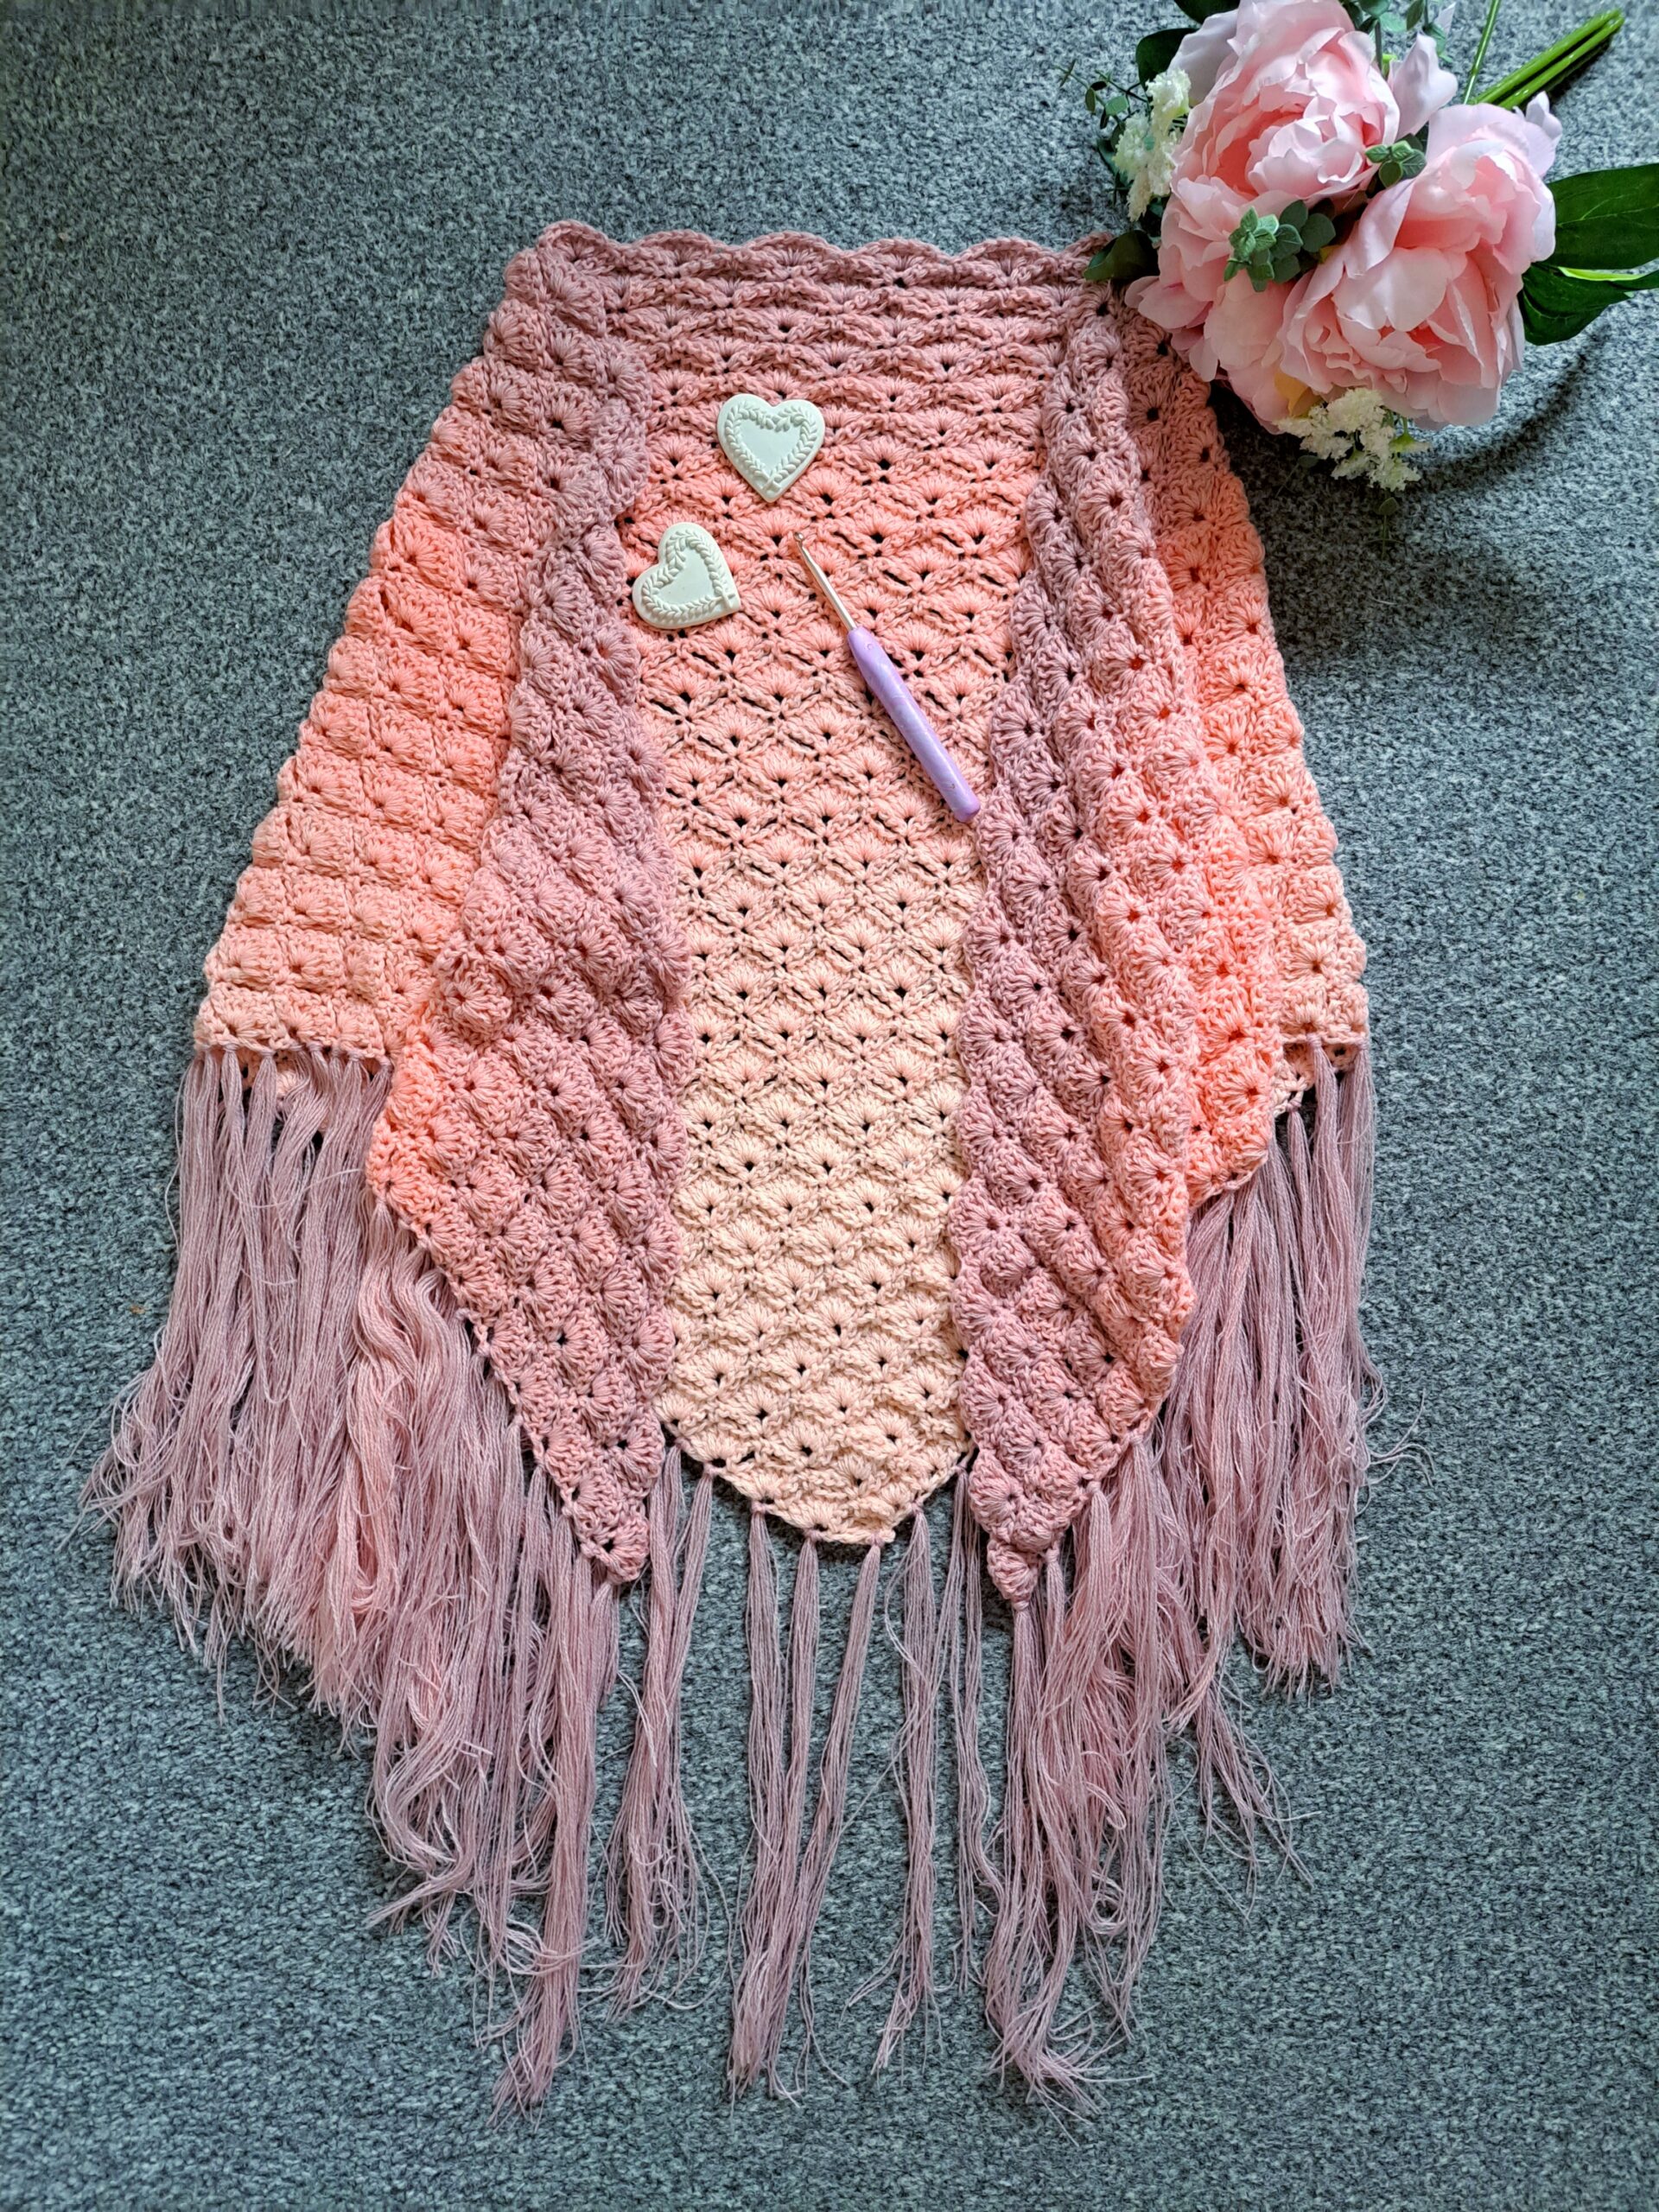 Crochet Victorian Shawl With Fringe Free Pattern